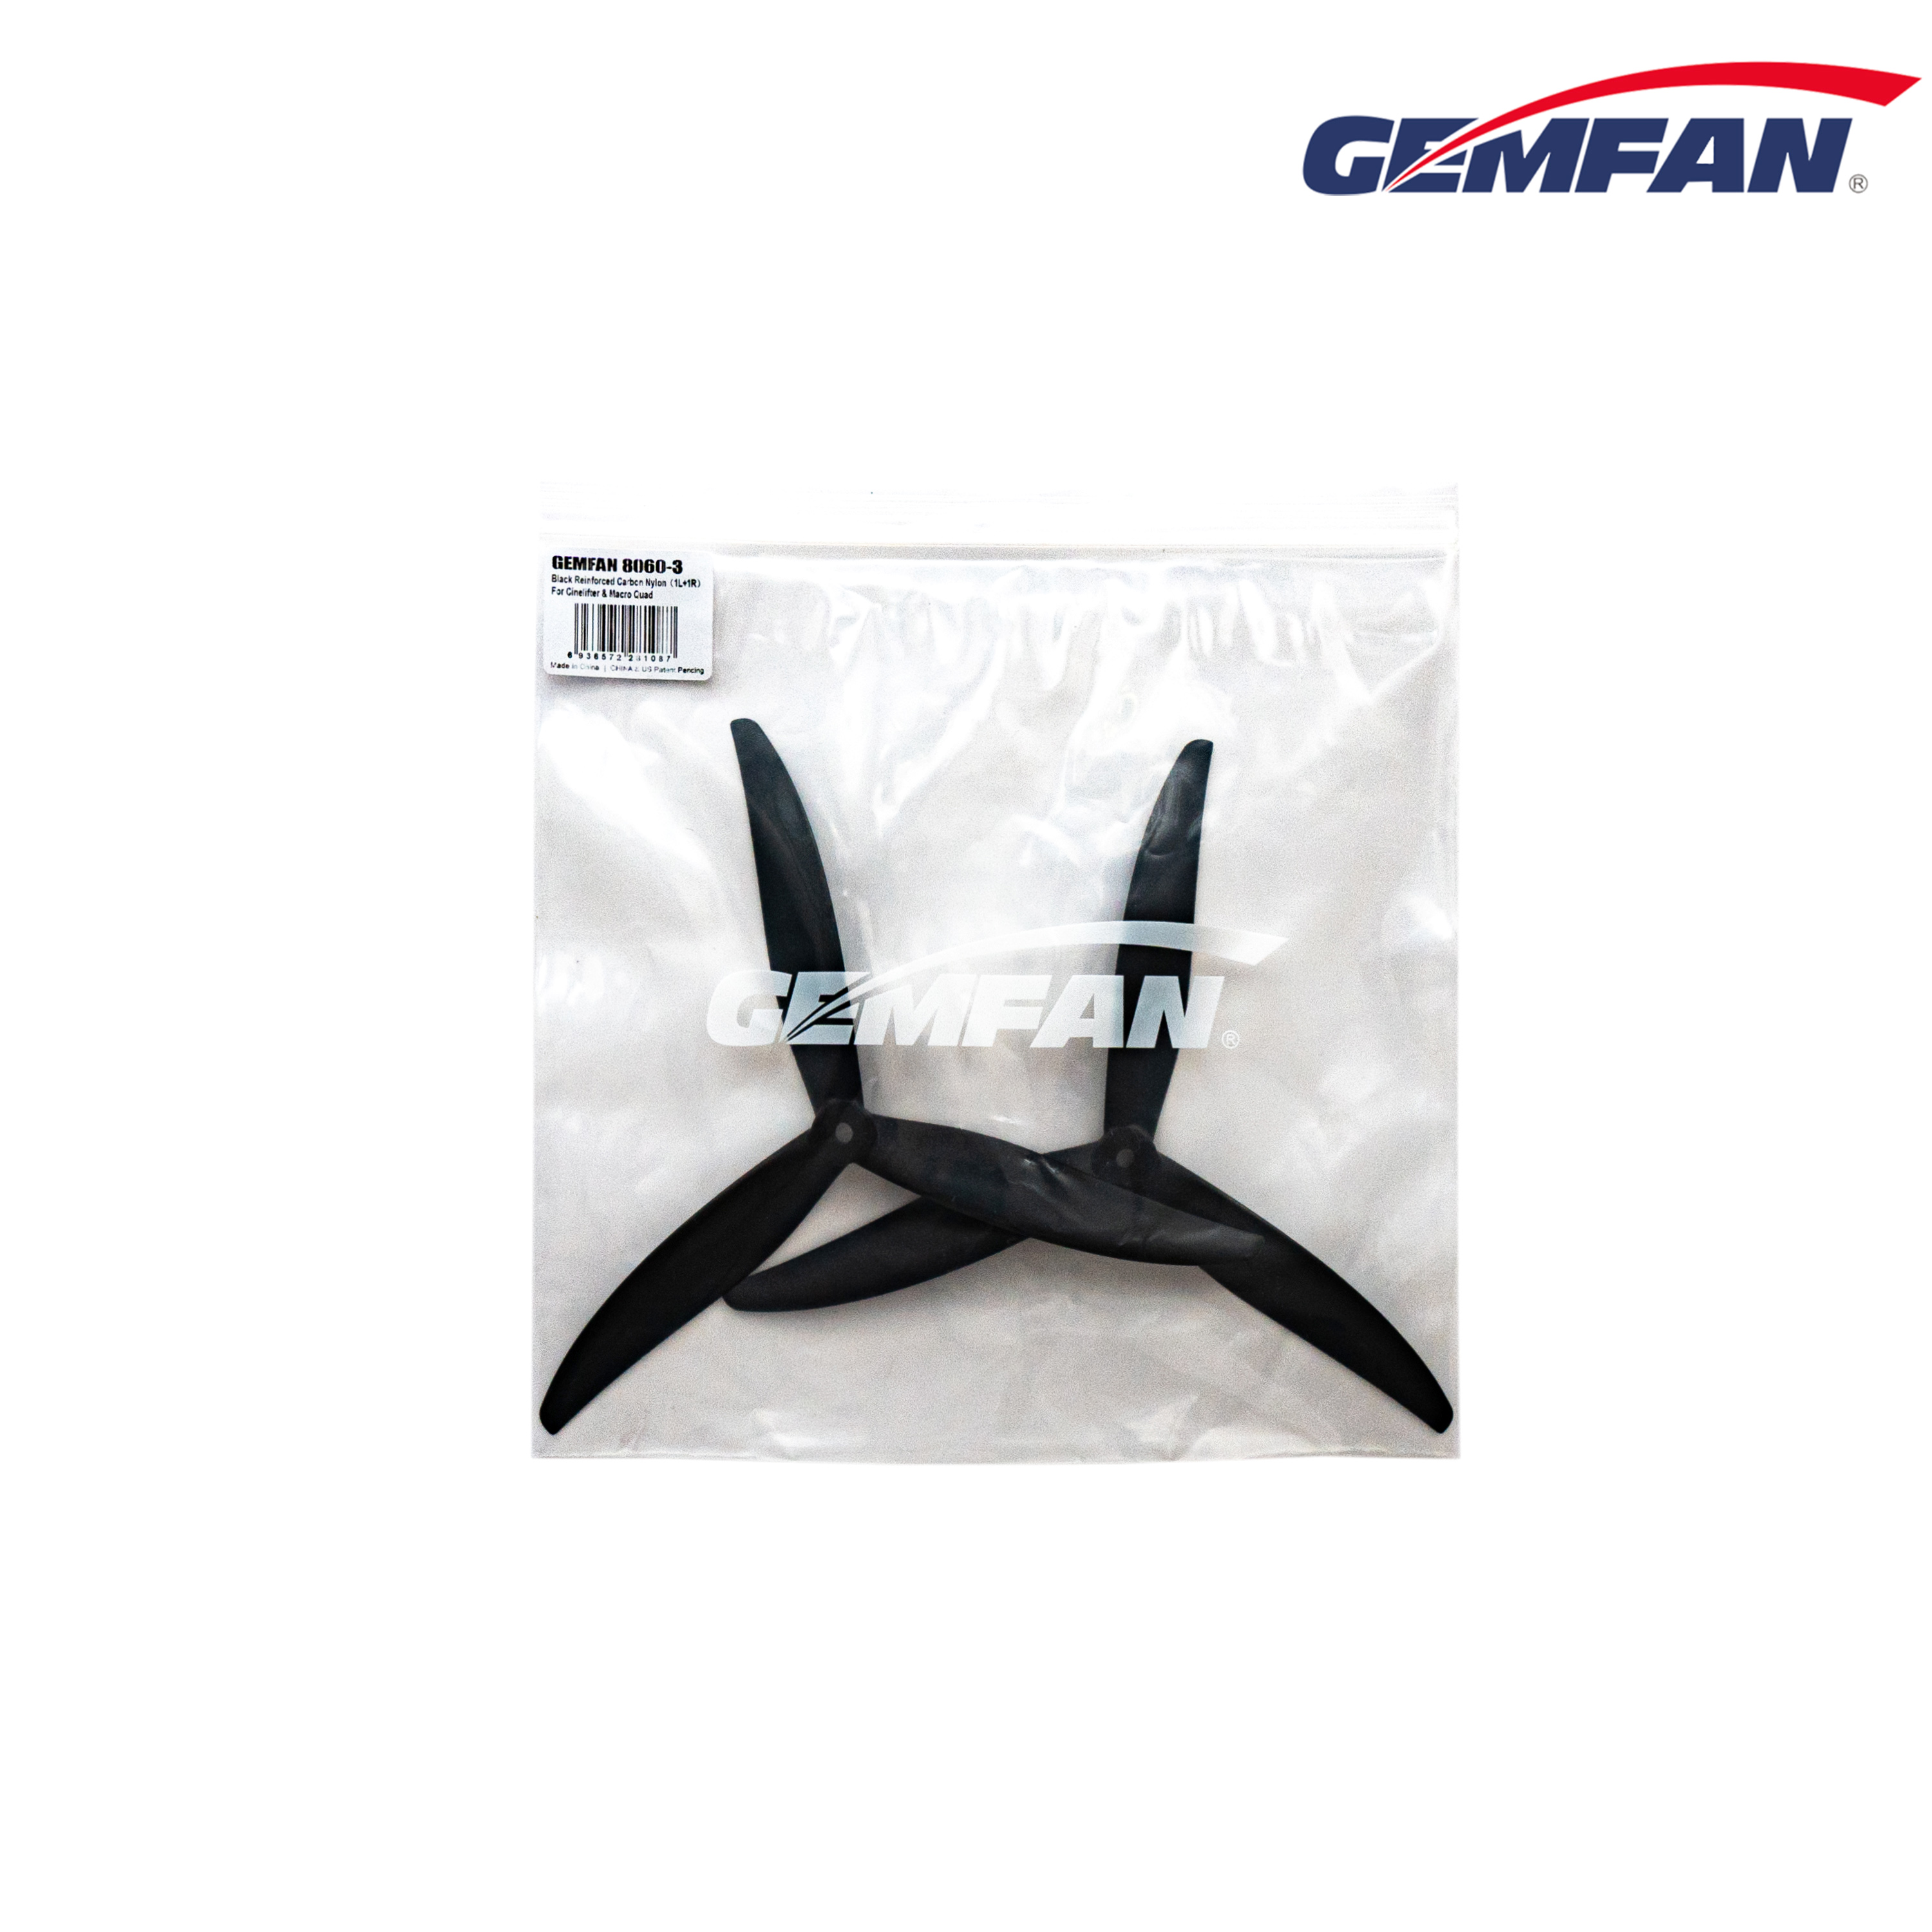 Gemfan 8060-3 Carbon Nylon for Cinelifter & Macro Quad